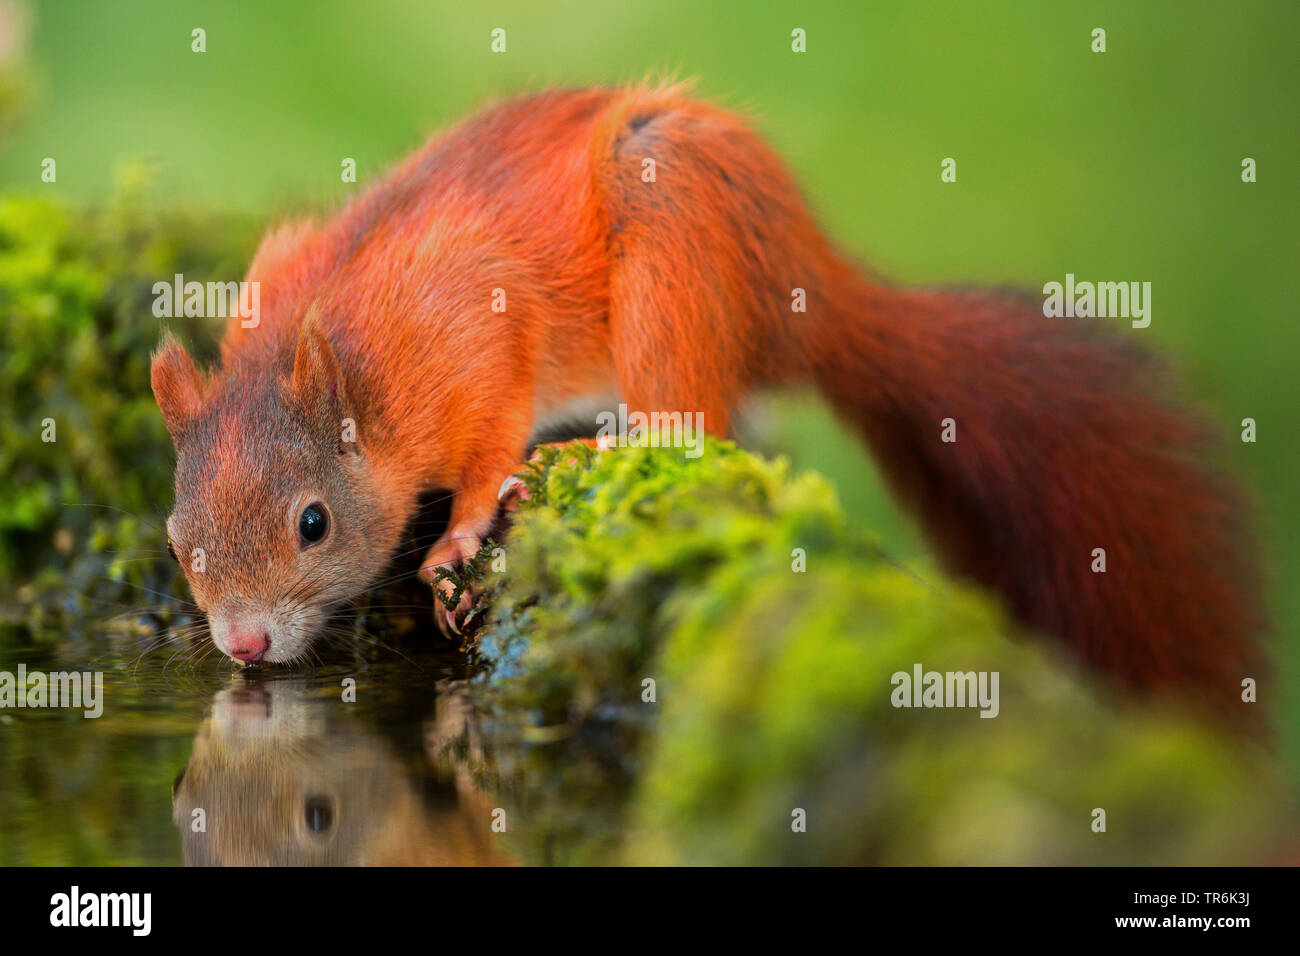 Unión Euroasiática ardilla roja, ardilla roja (Sciurus vulgaris), beber, Alemania Foto de stock